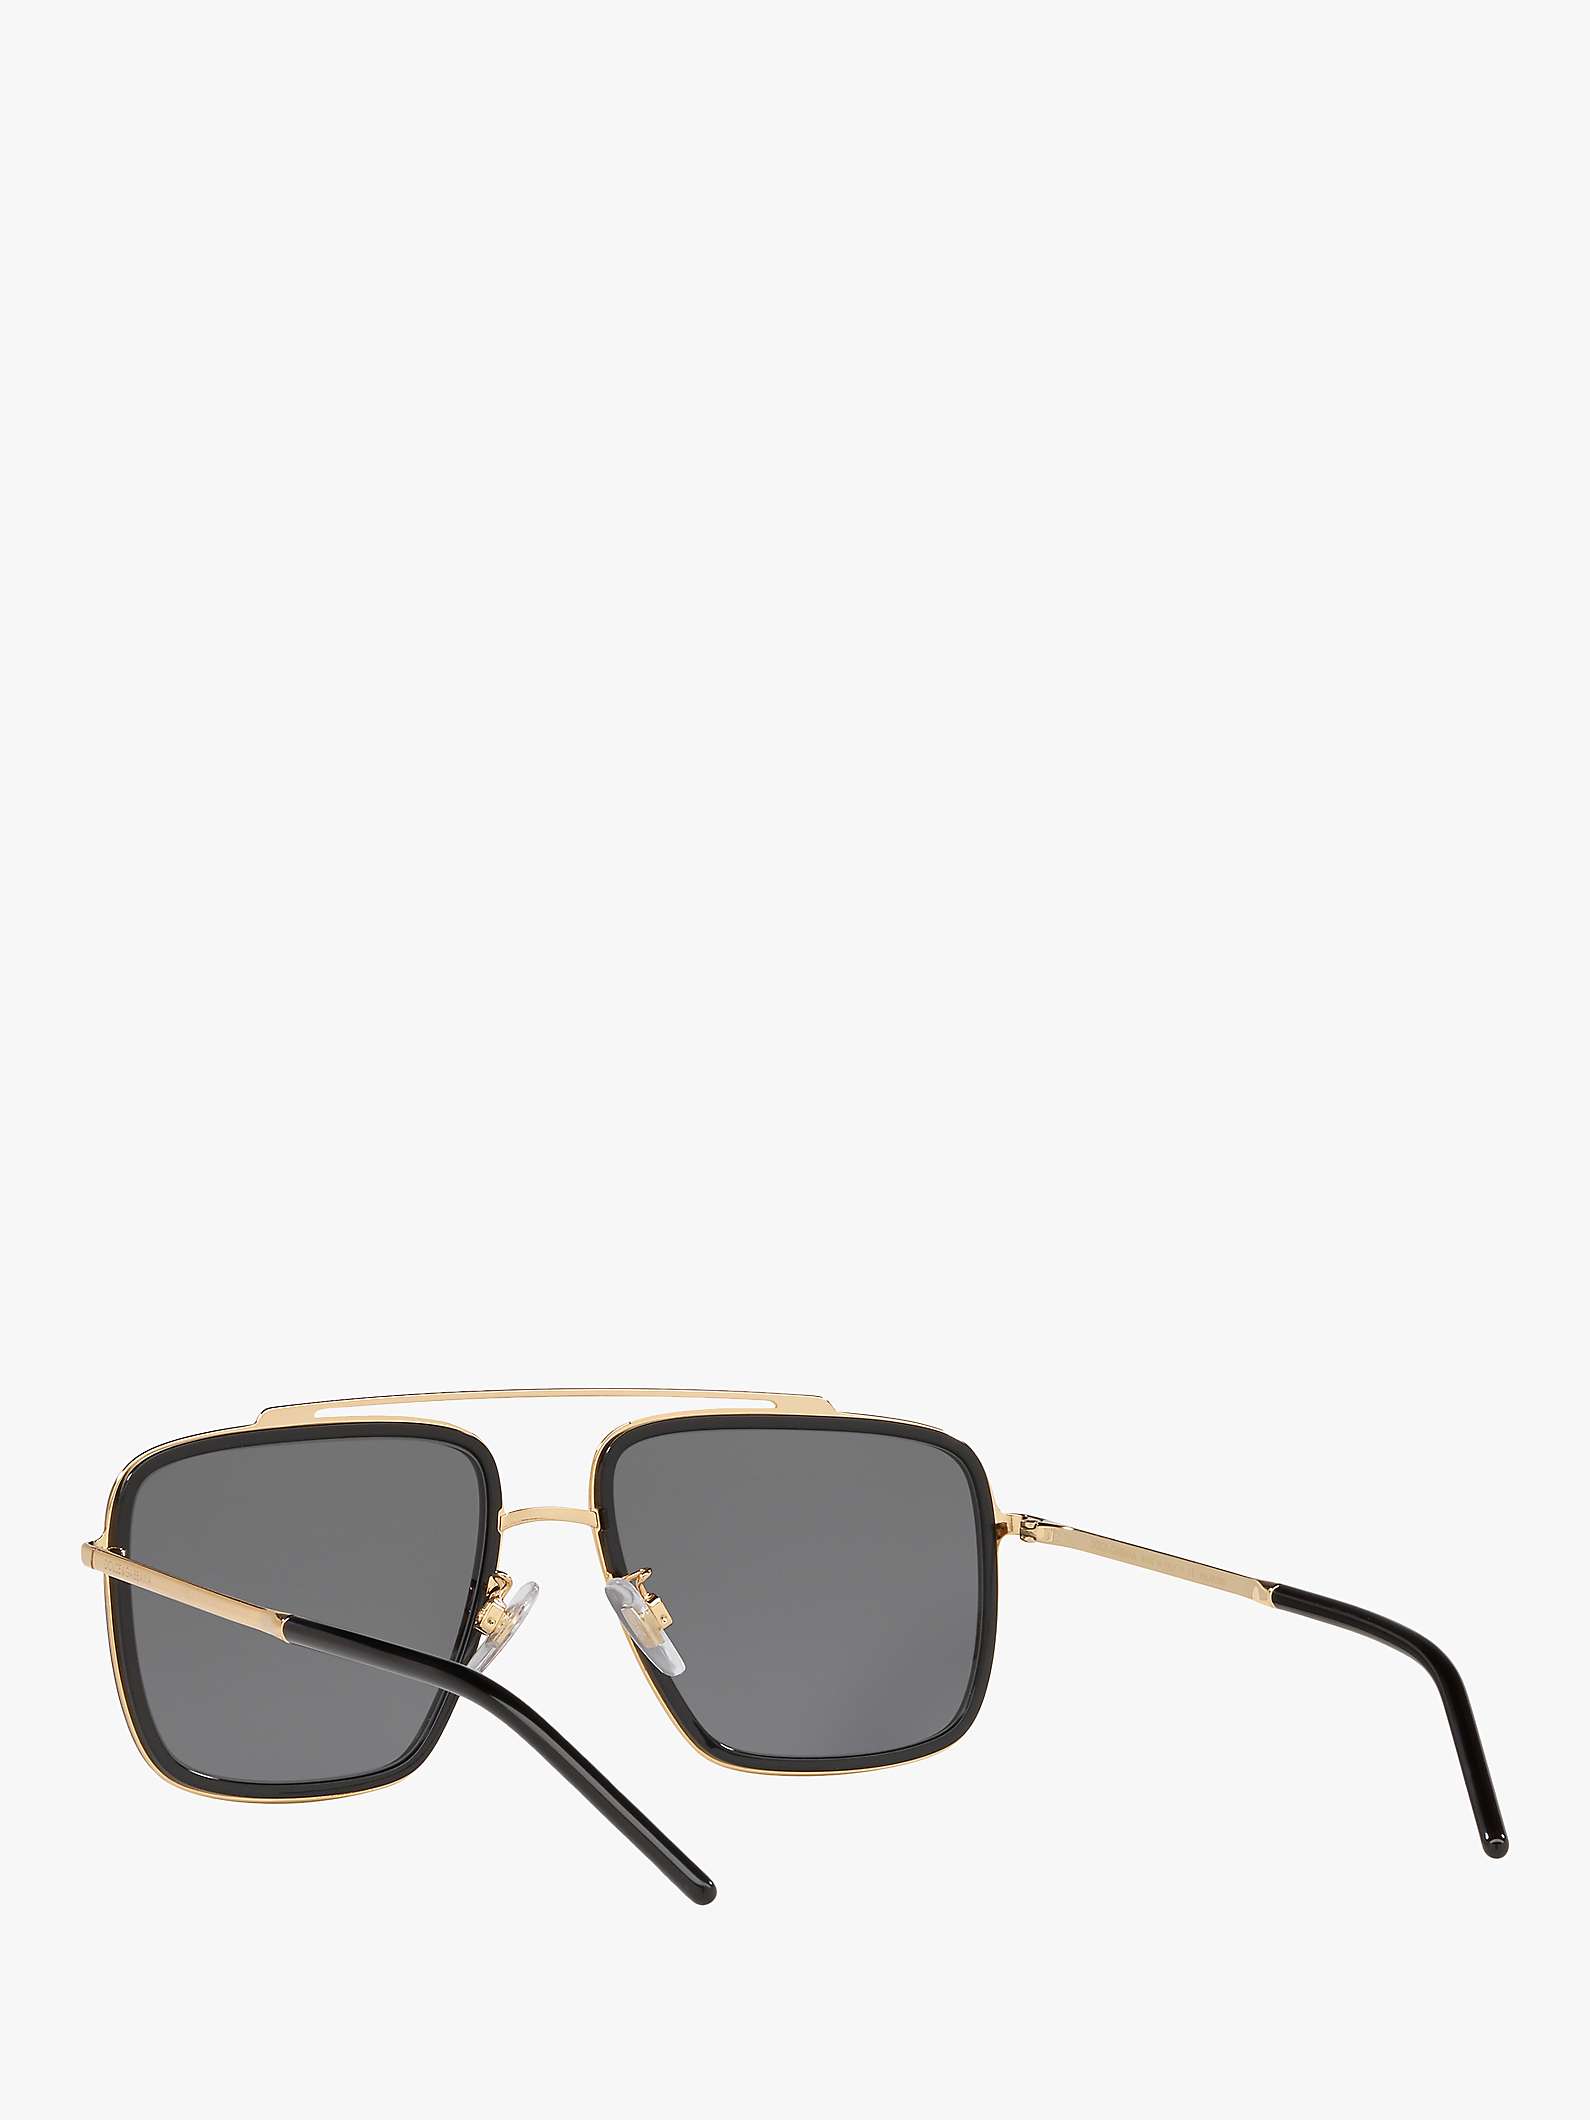 Buy Dolce & Gabbana DG2220 Men's Polarised Square Sunglasses, Gold/Black Online at johnlewis.com